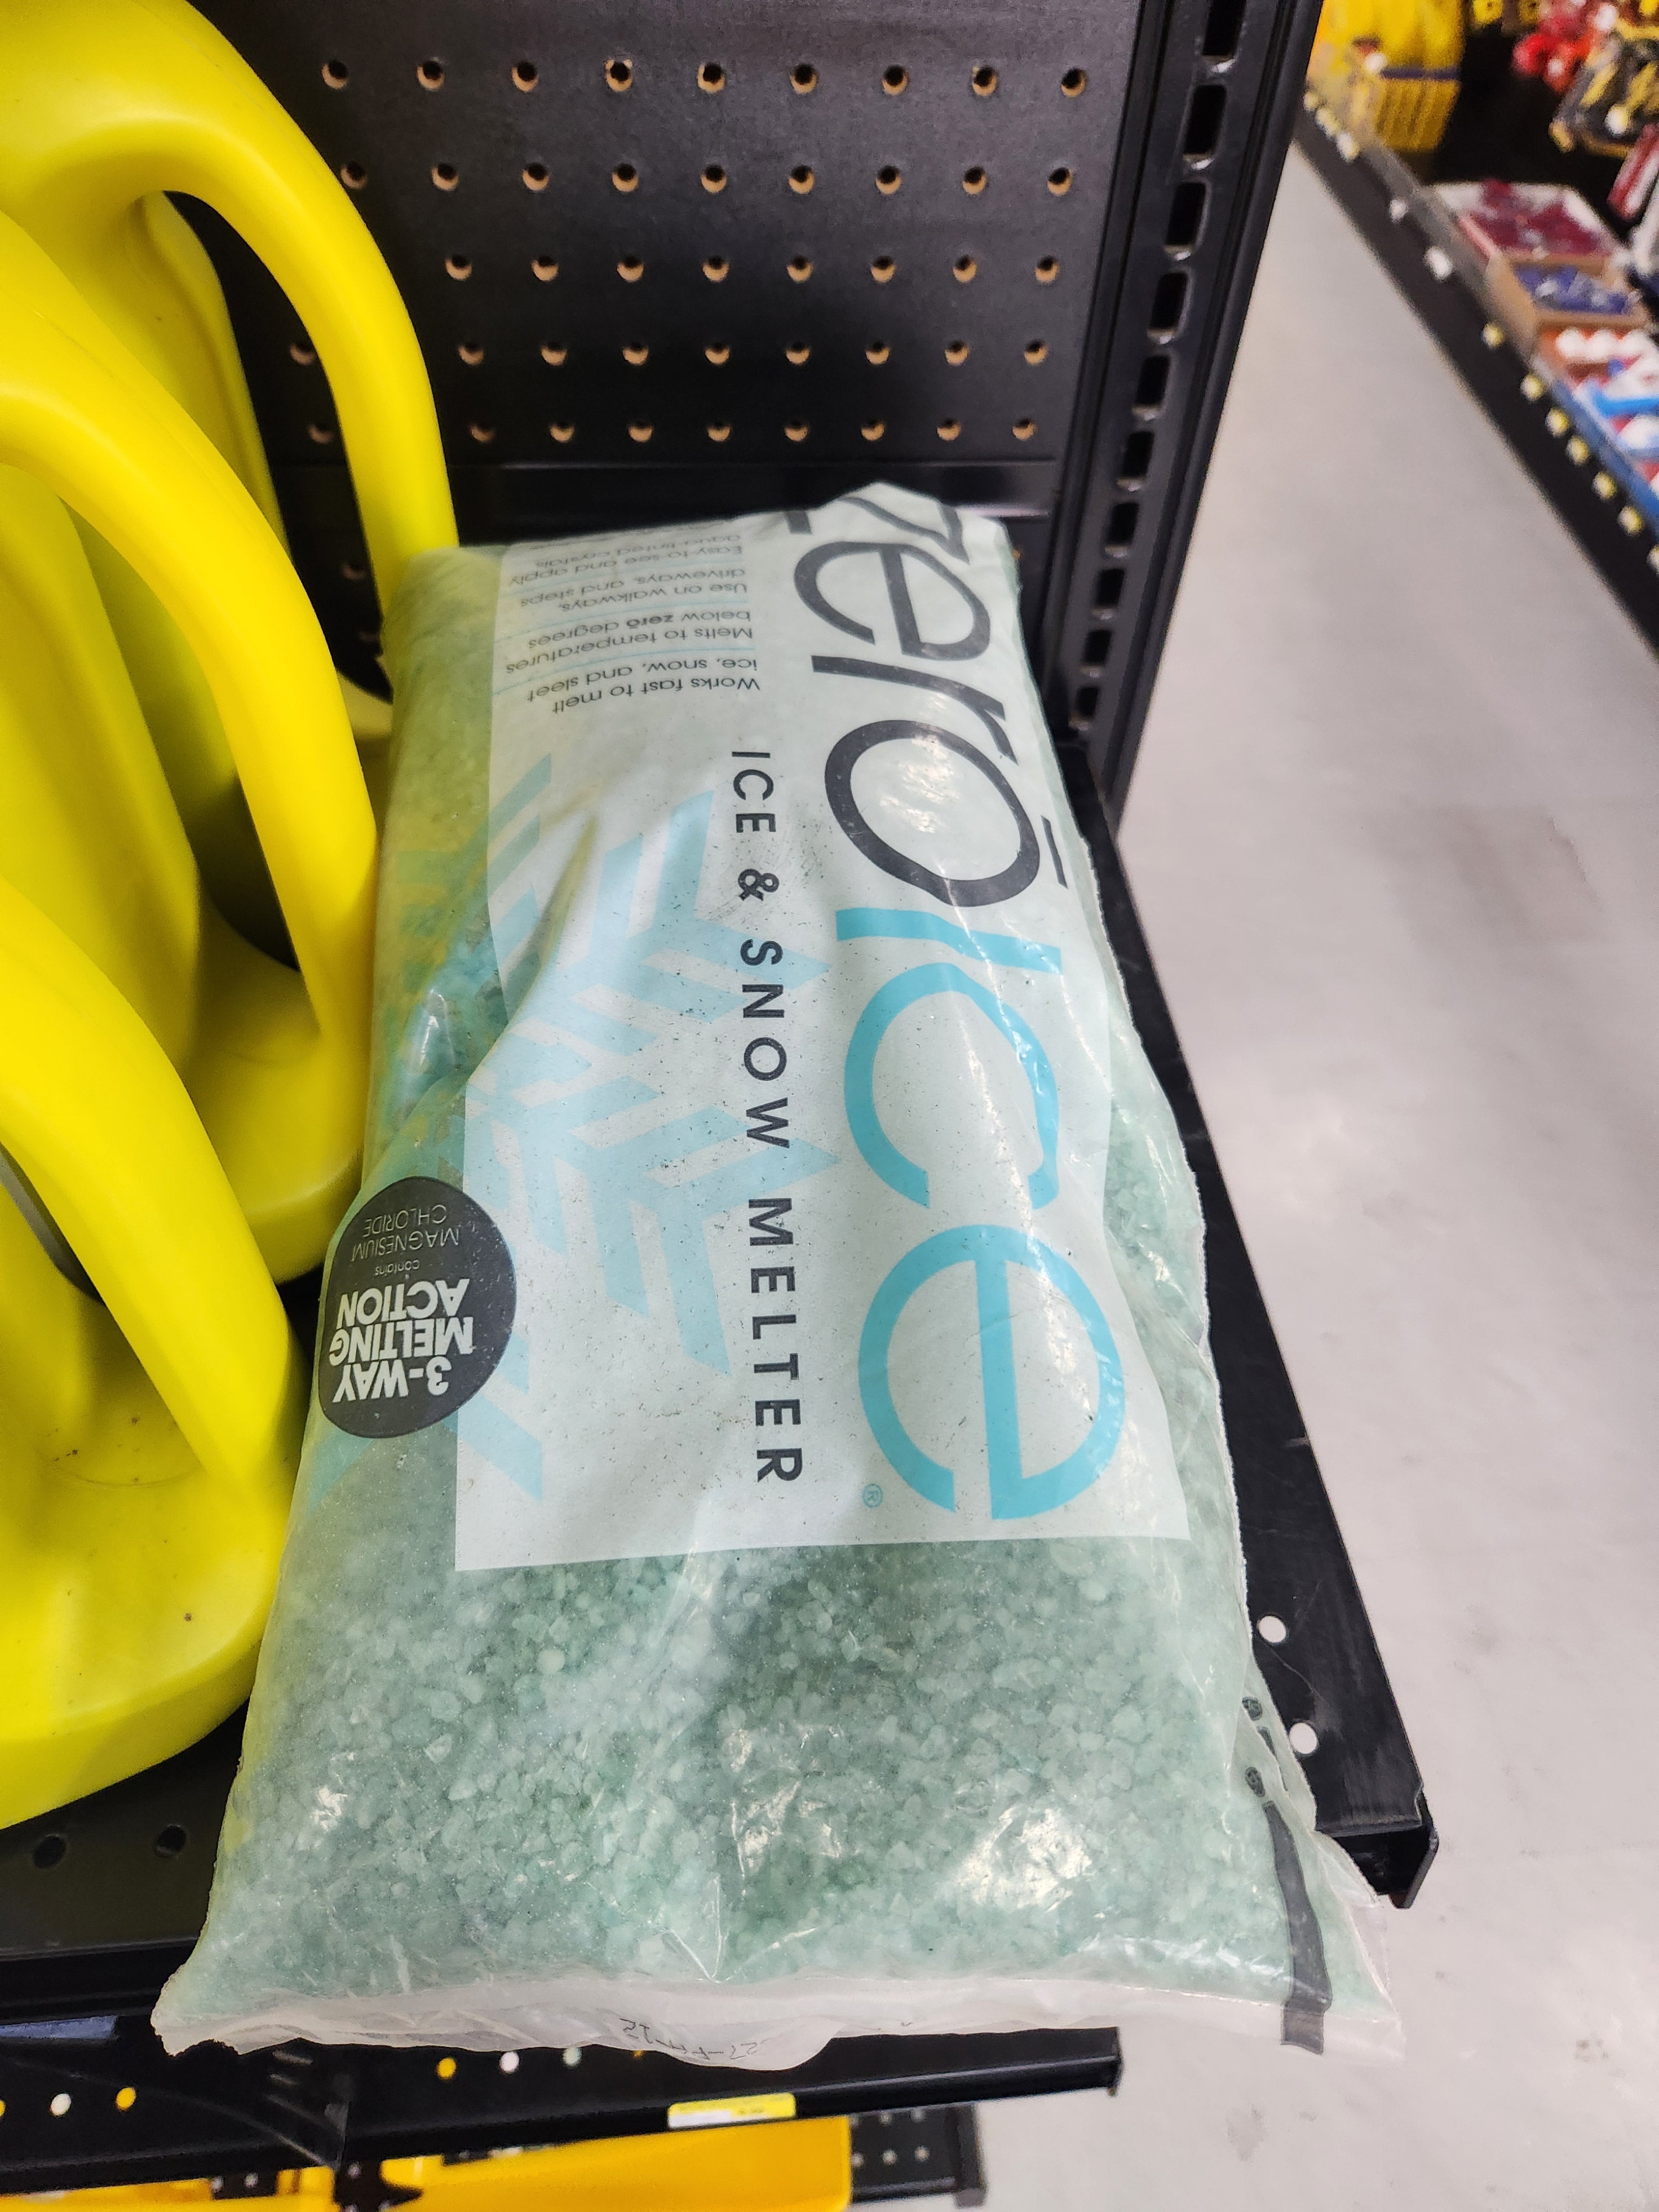 HJ Zero Ice 9529 Ice Melter, Granular, Aqua/White, 10 lb Bag